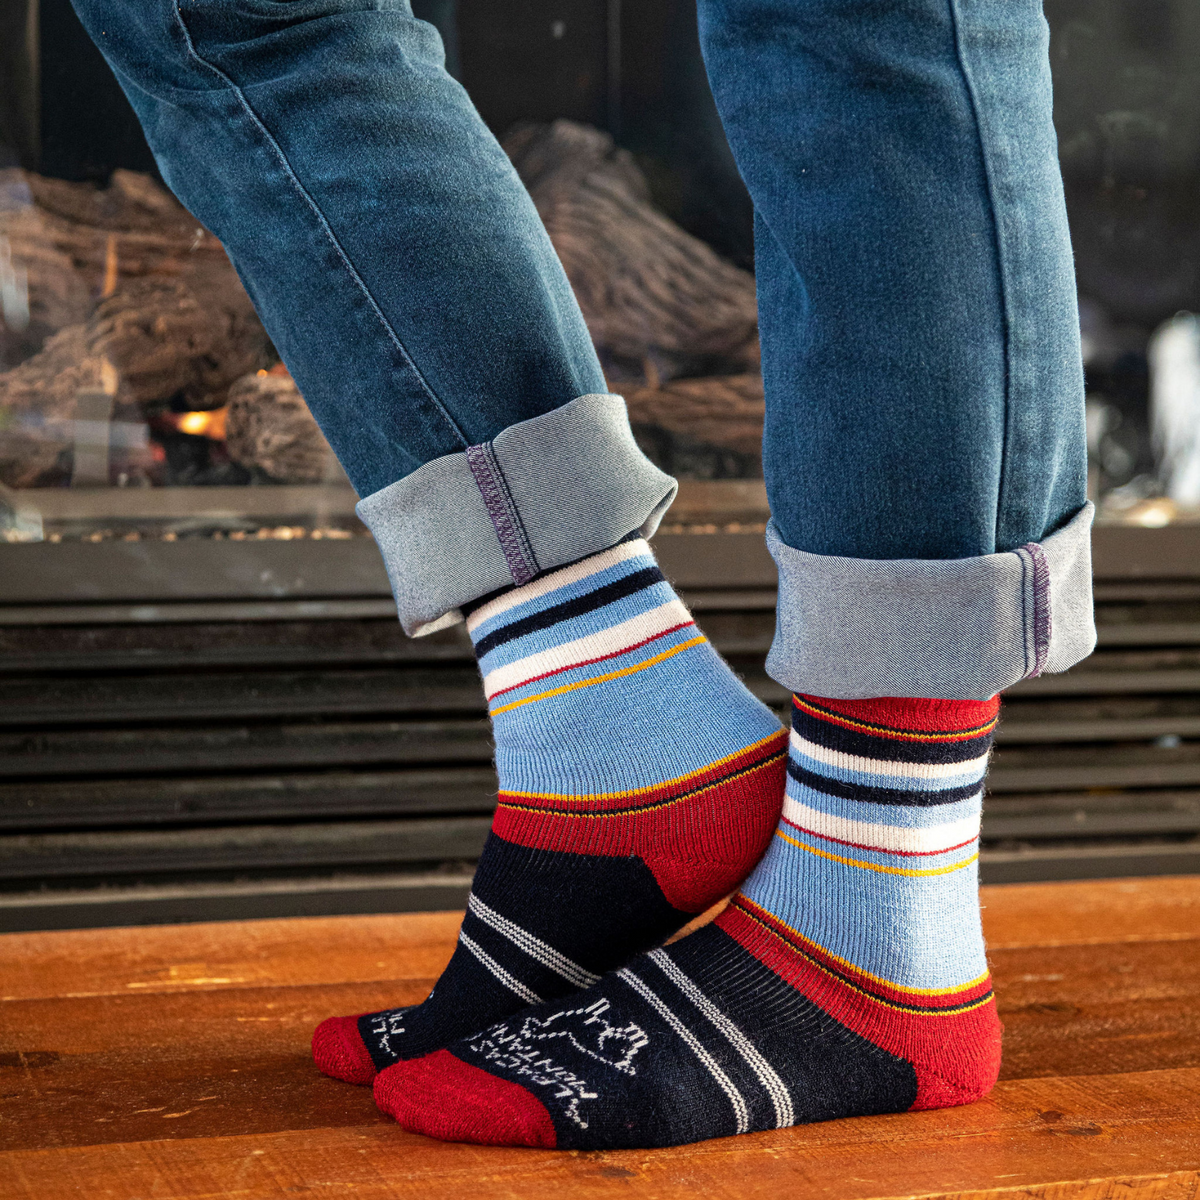 Warm, Cozy Socks for Cold Feet